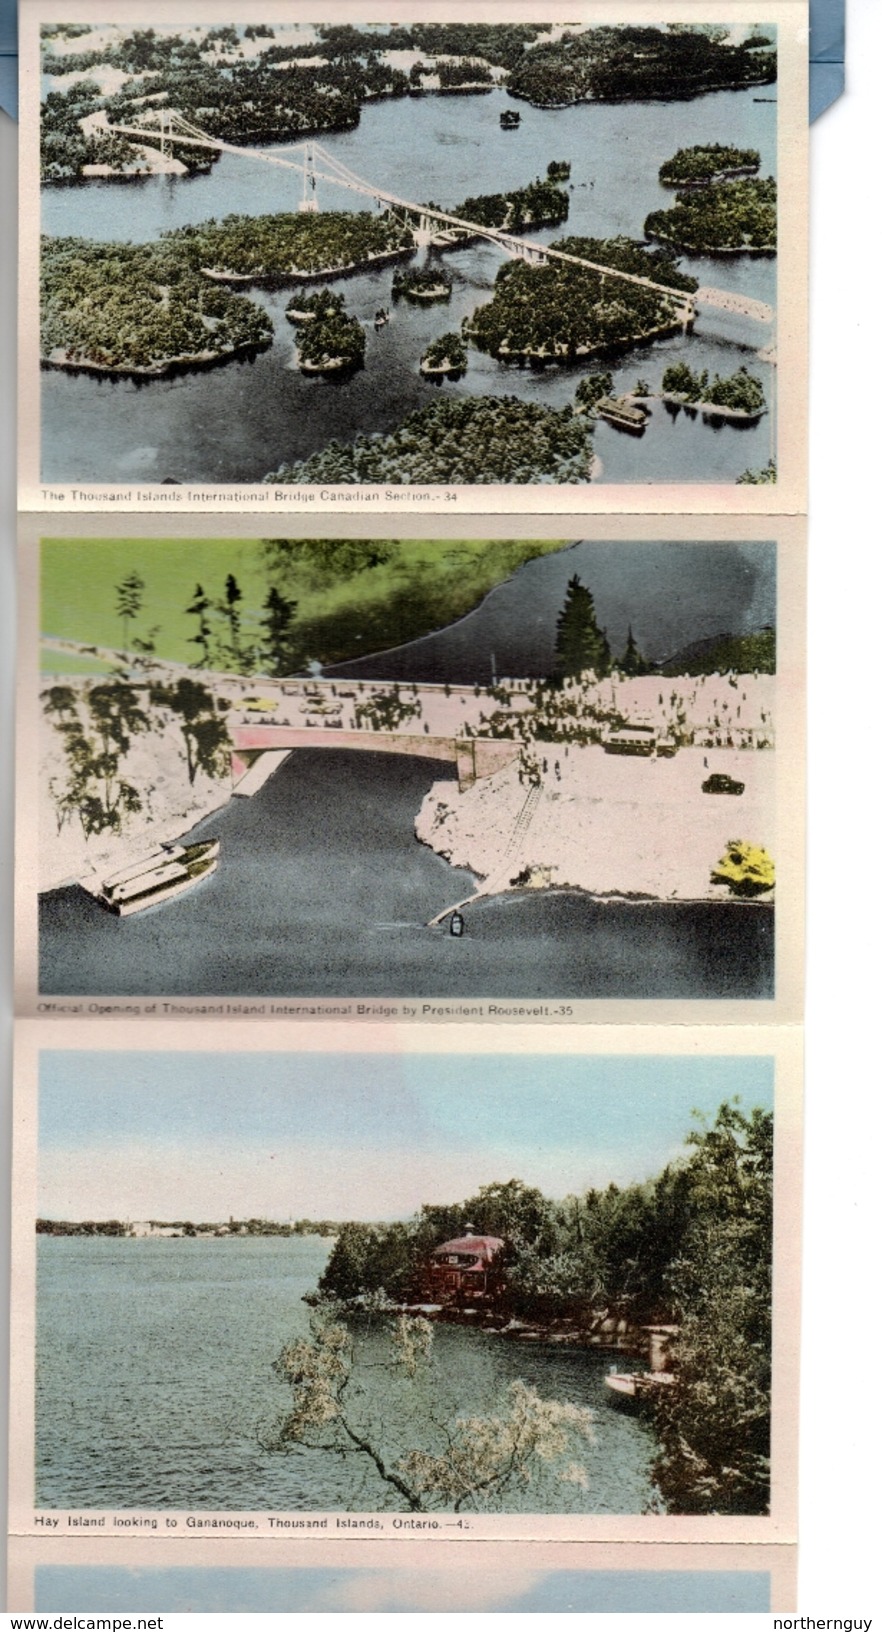 Thousand Islands, Ontario, Canada, Souvenir Fold-Out Postcard, Frontenac County - Thousand Islands